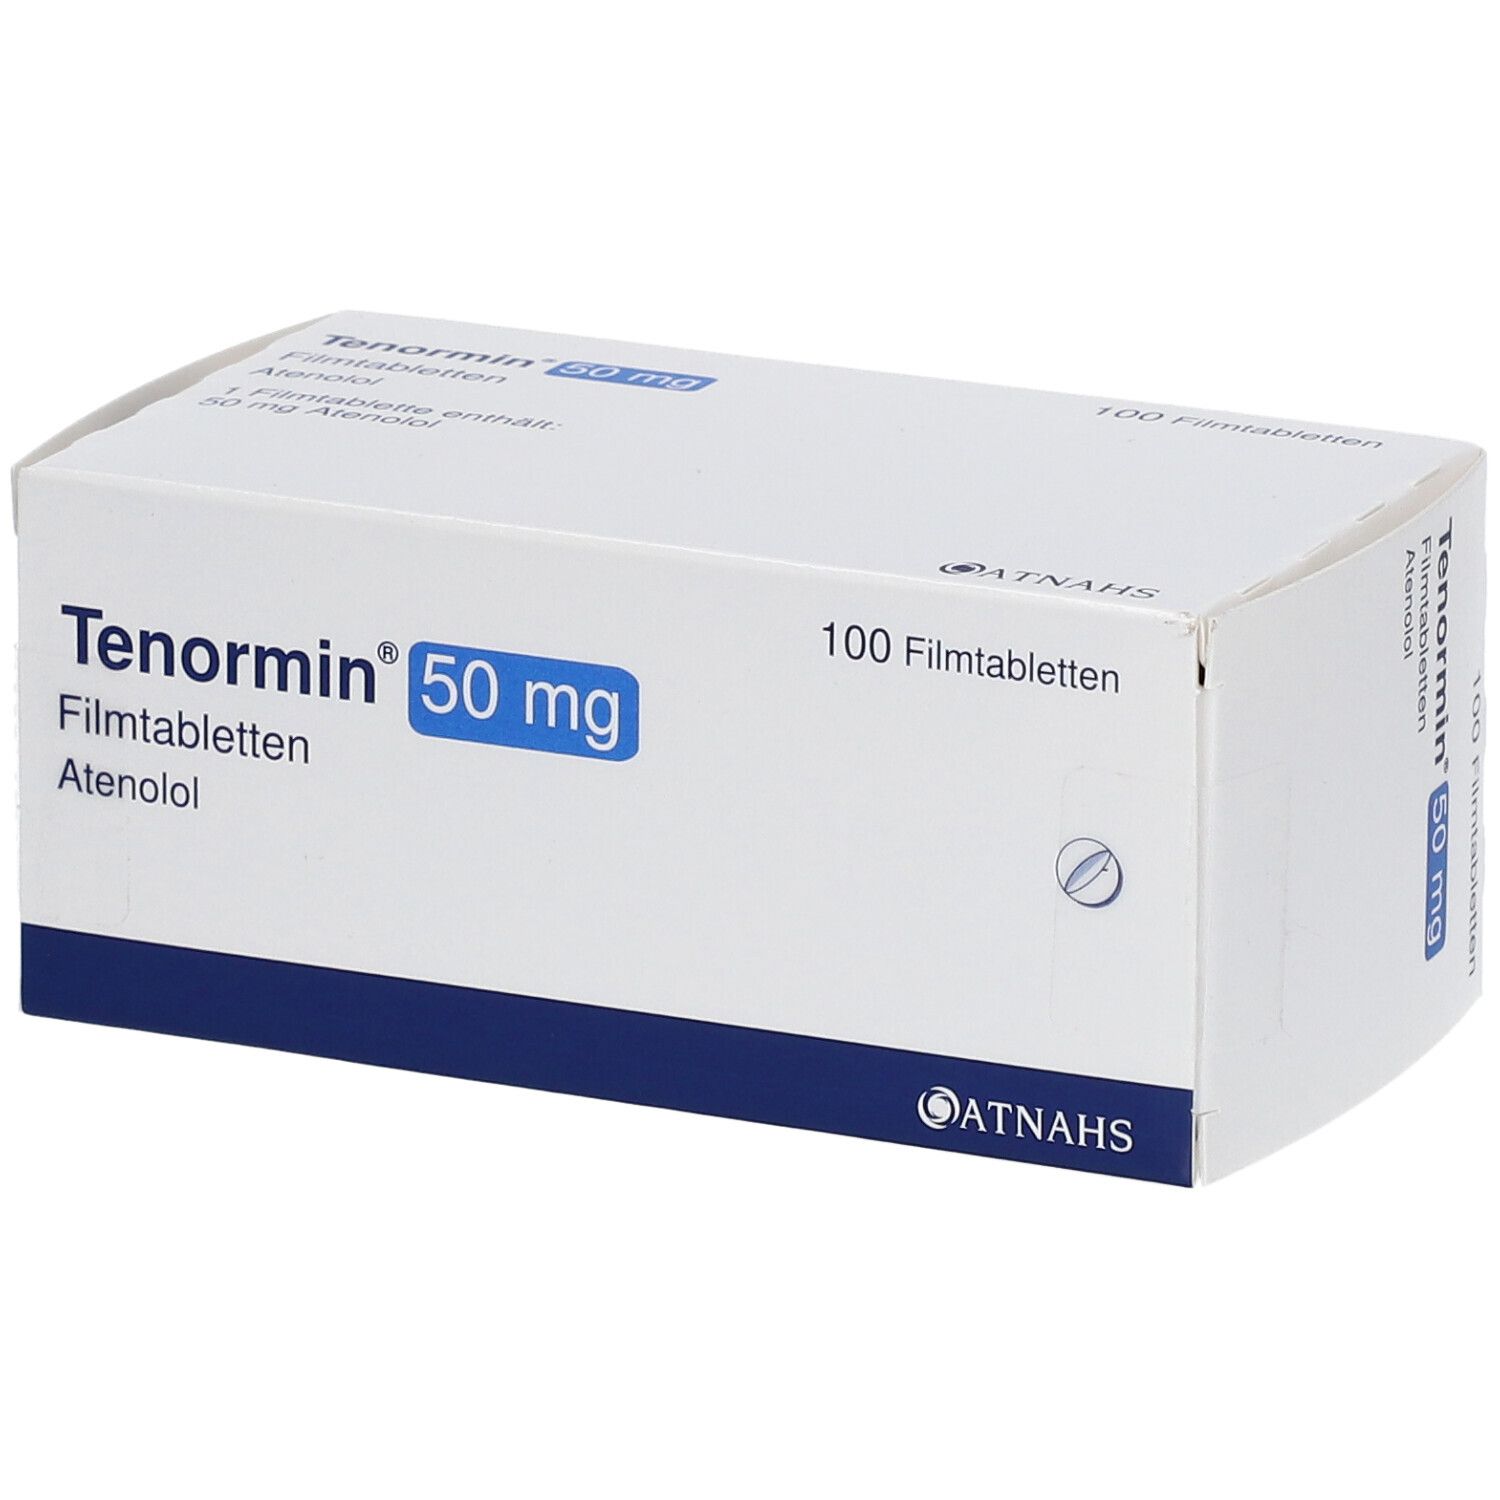 Tenormin® 50 mg